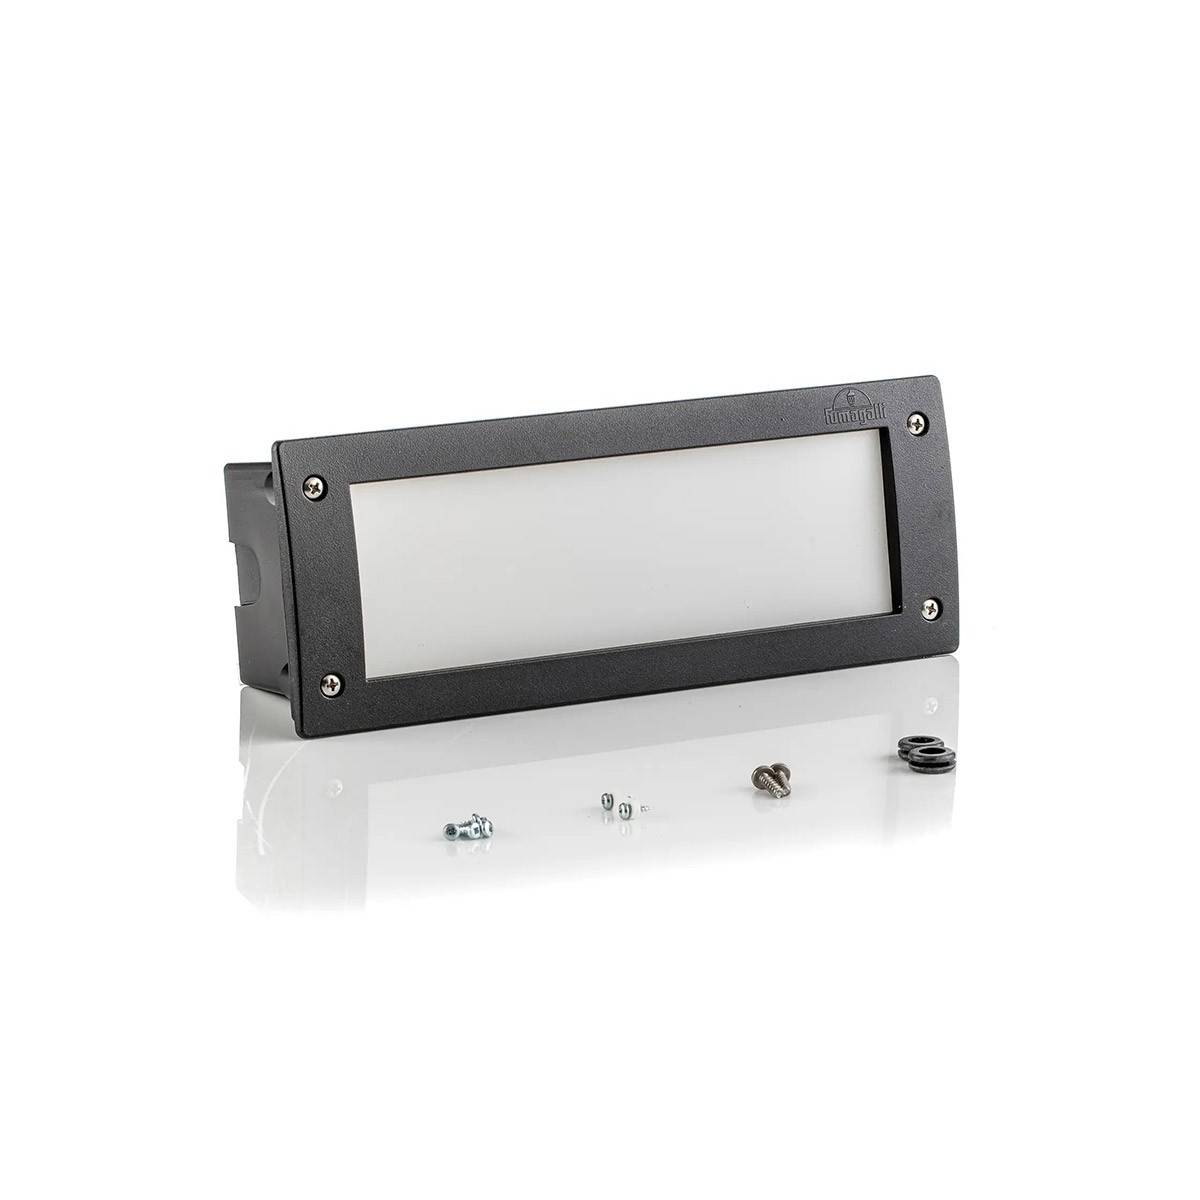 Fumagalli LETI 300 E27 6W LED-Einbau-Downlight